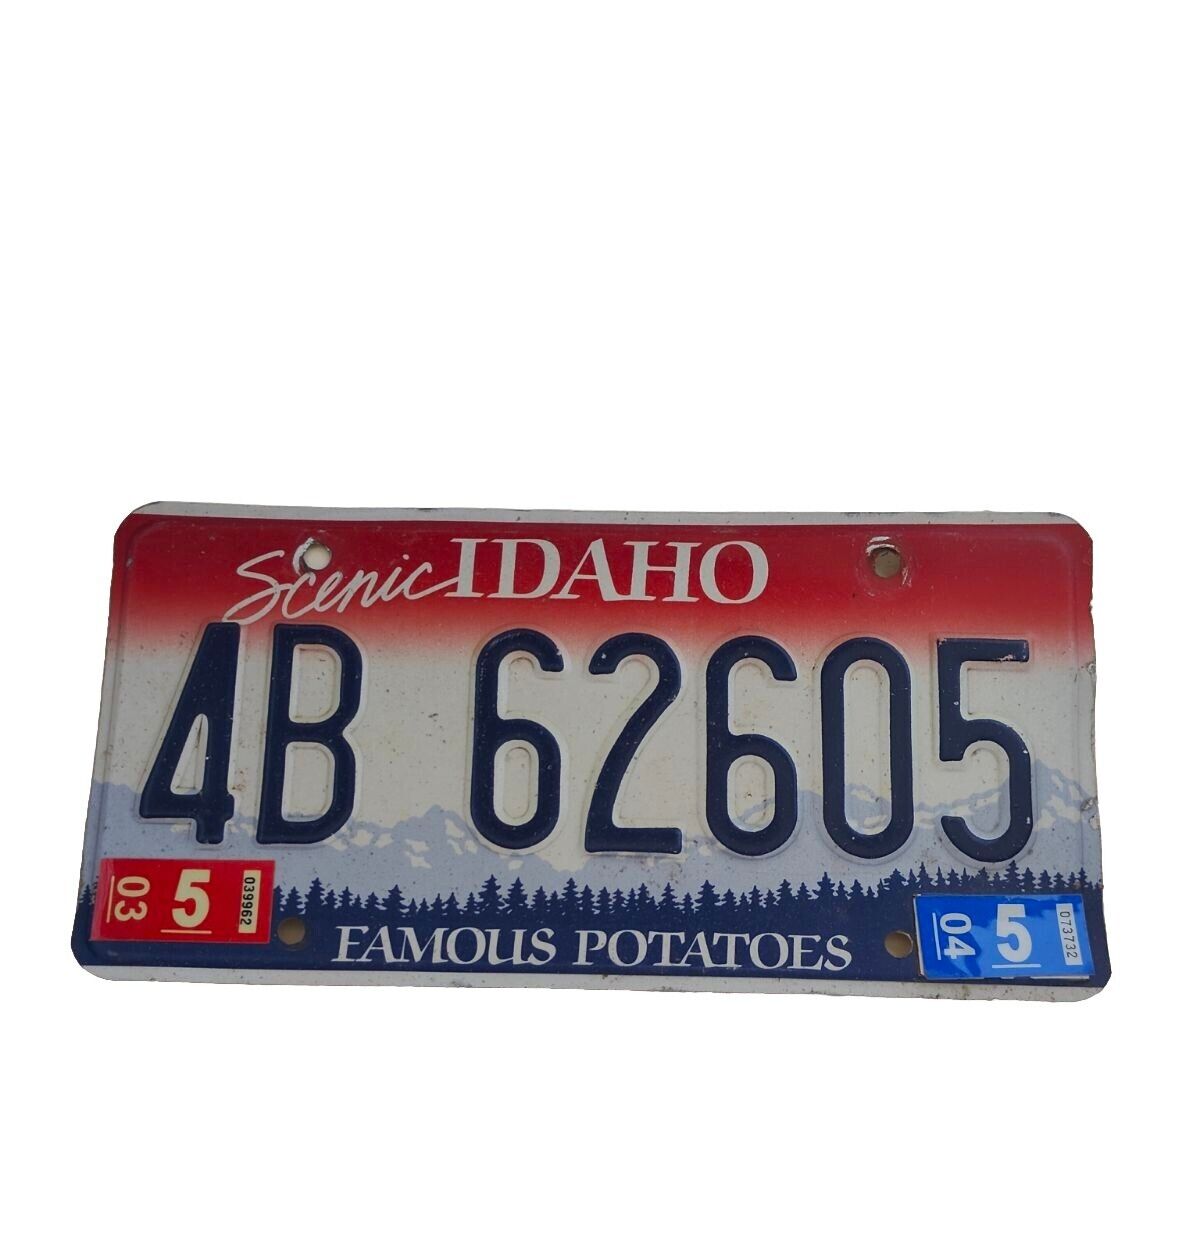 2003 Scenic Idaho License Plate Bingham County Famous Potatoes 4B 62605 Man Cave